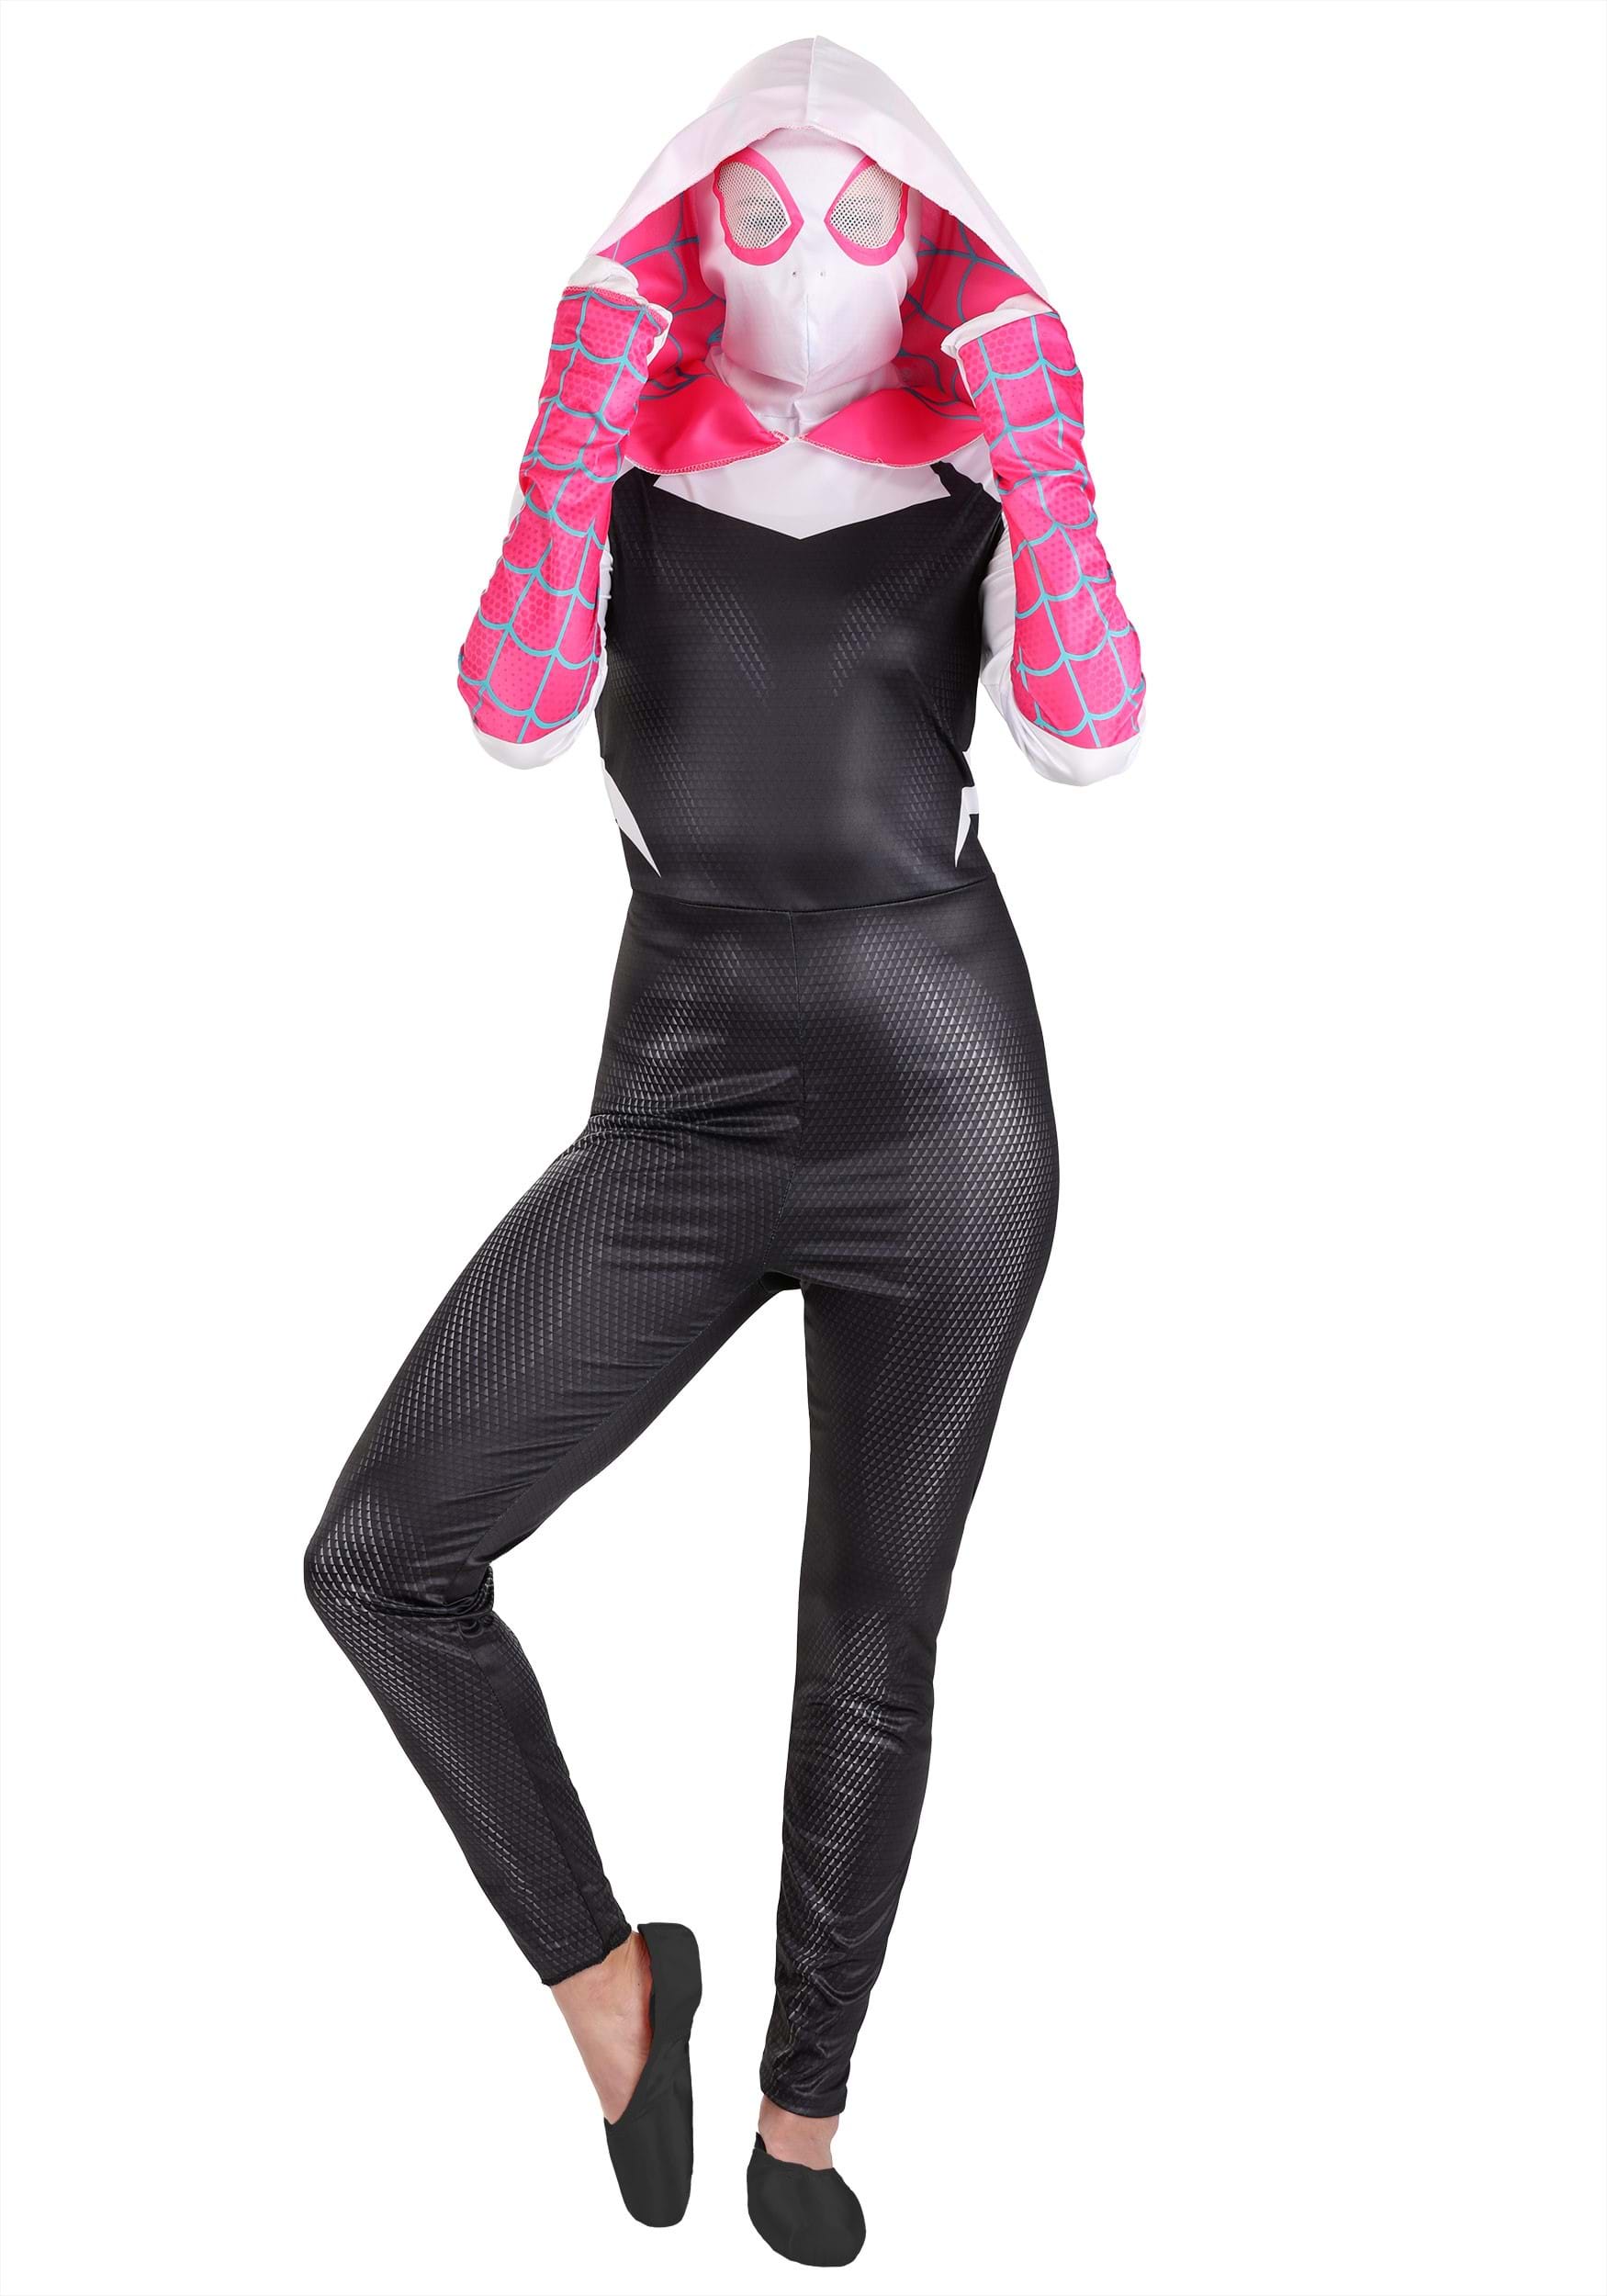 Spider-Gwen Adult Fancy Dress Costume